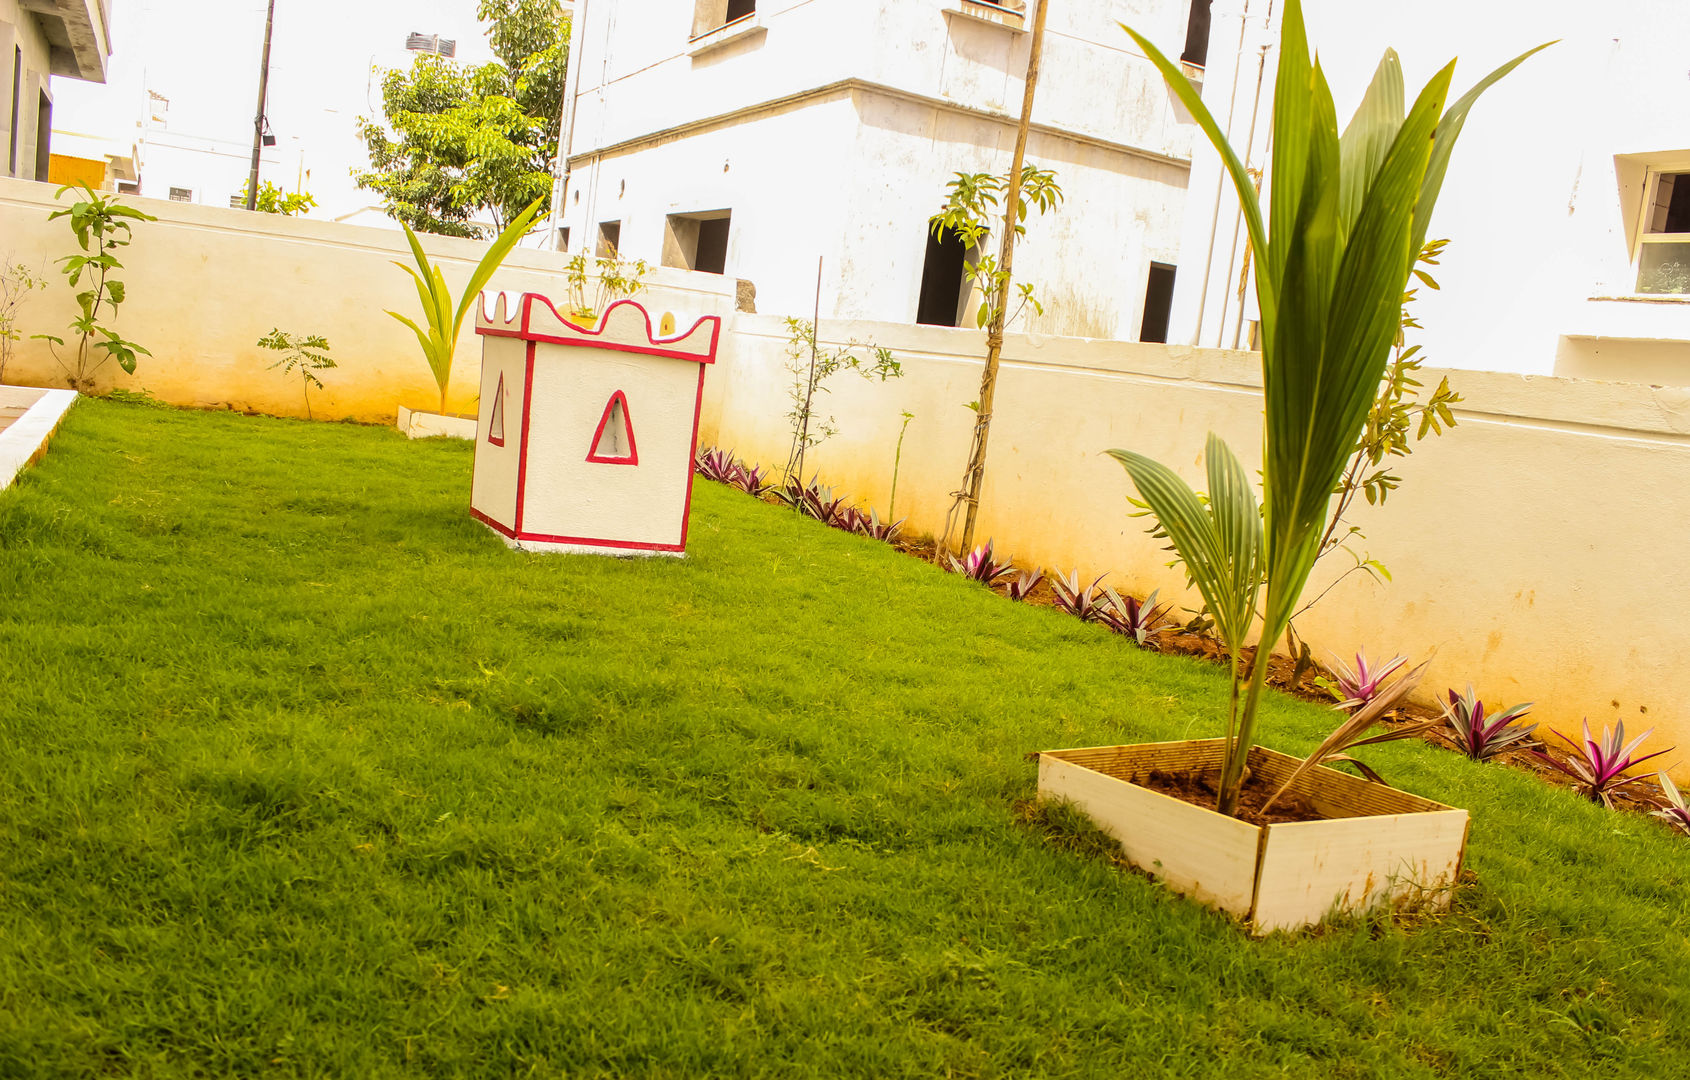 Villa at Appa Junction, Hyderabad., Happy Homes Designers Happy Homes Designers Vườn nội thất Interior landscaping